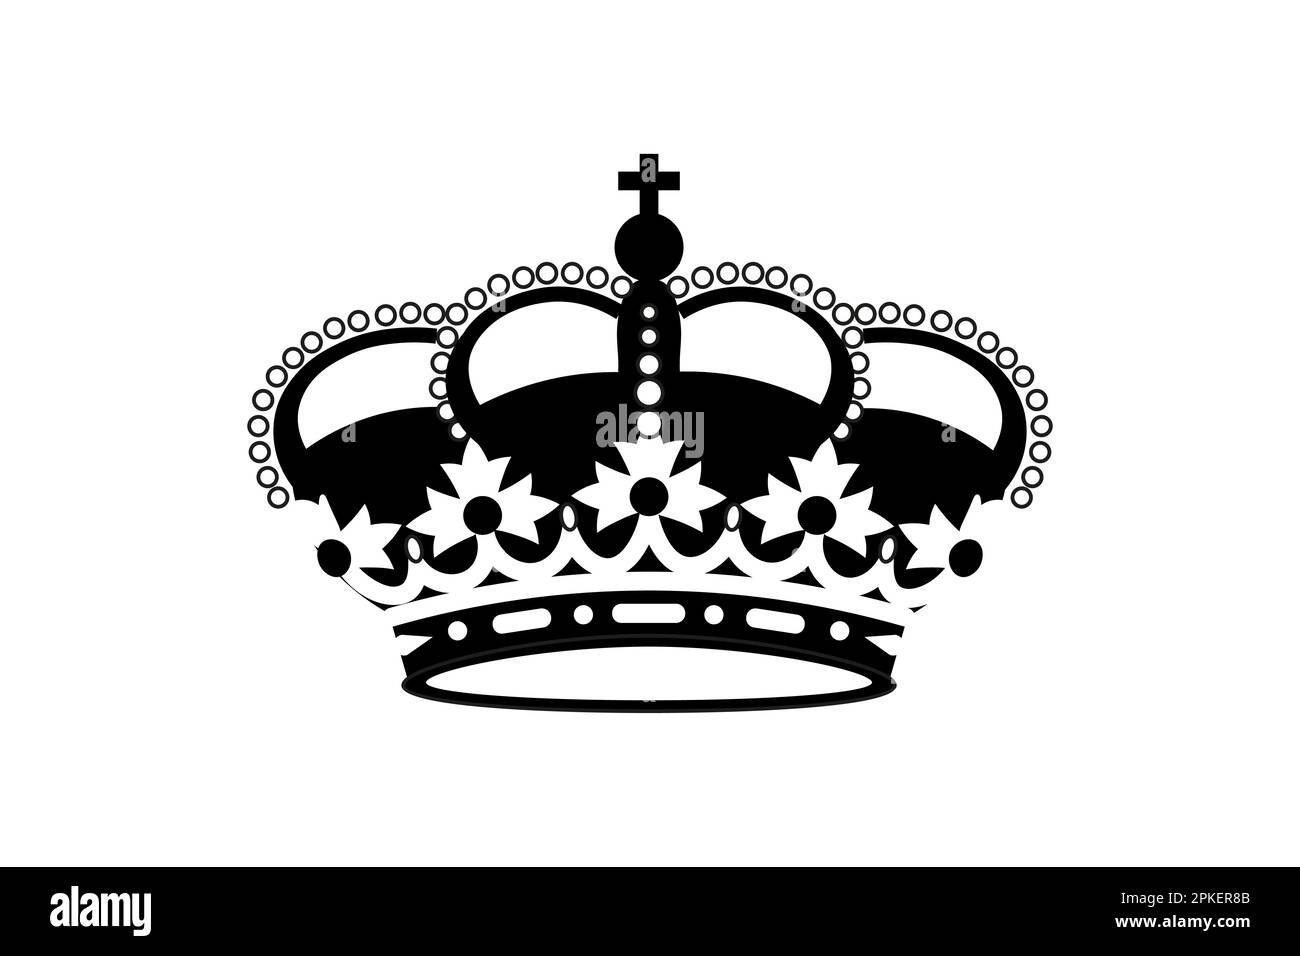 Crown icon symbol silhouette black color Stock Vector